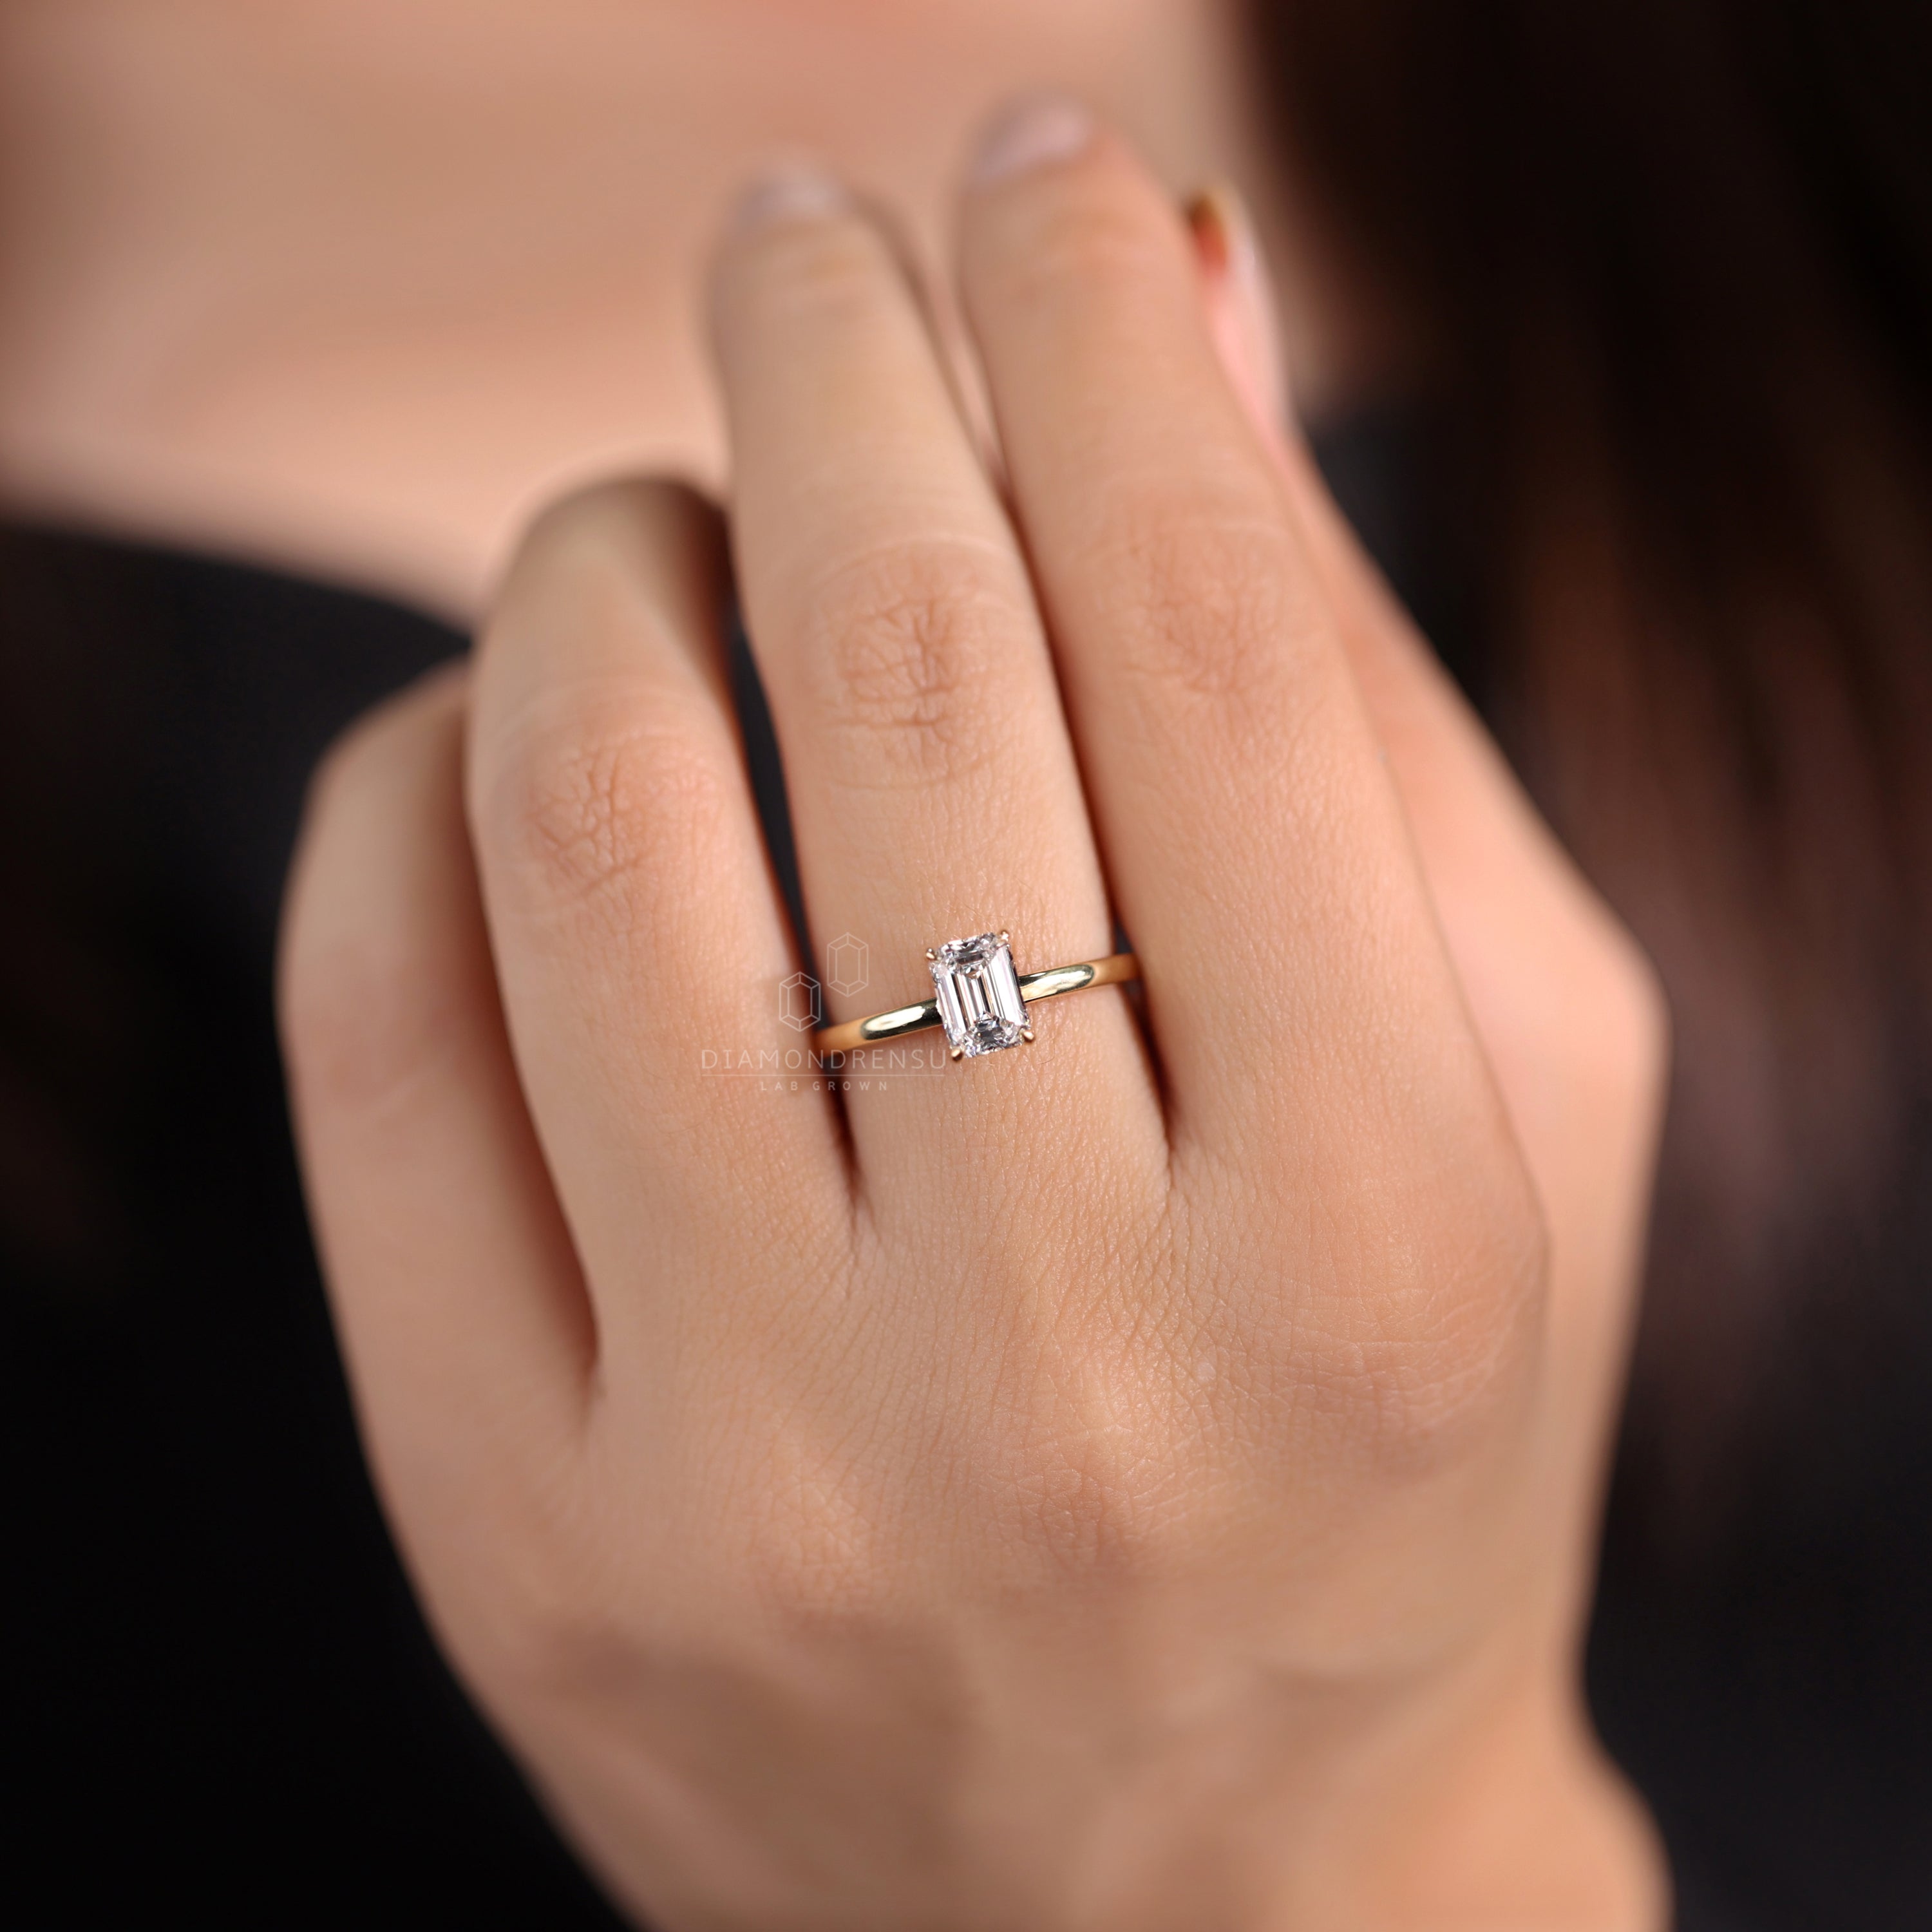 lab created diamond engagement ring - diamondrensu